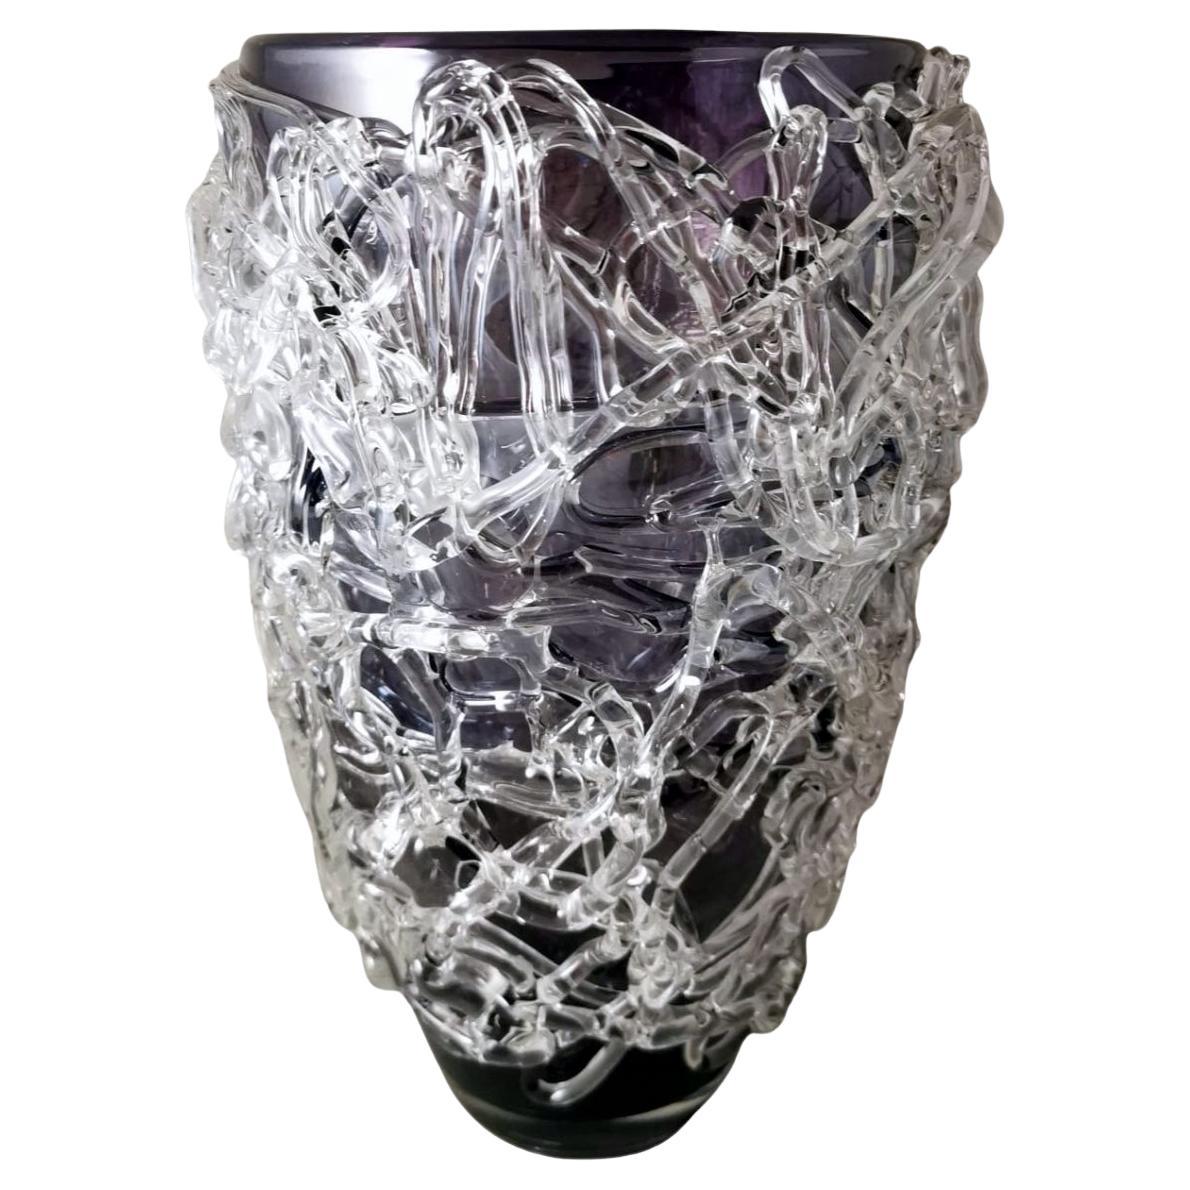 Murano Italian Vase With Glass Threads Applied In Bulk